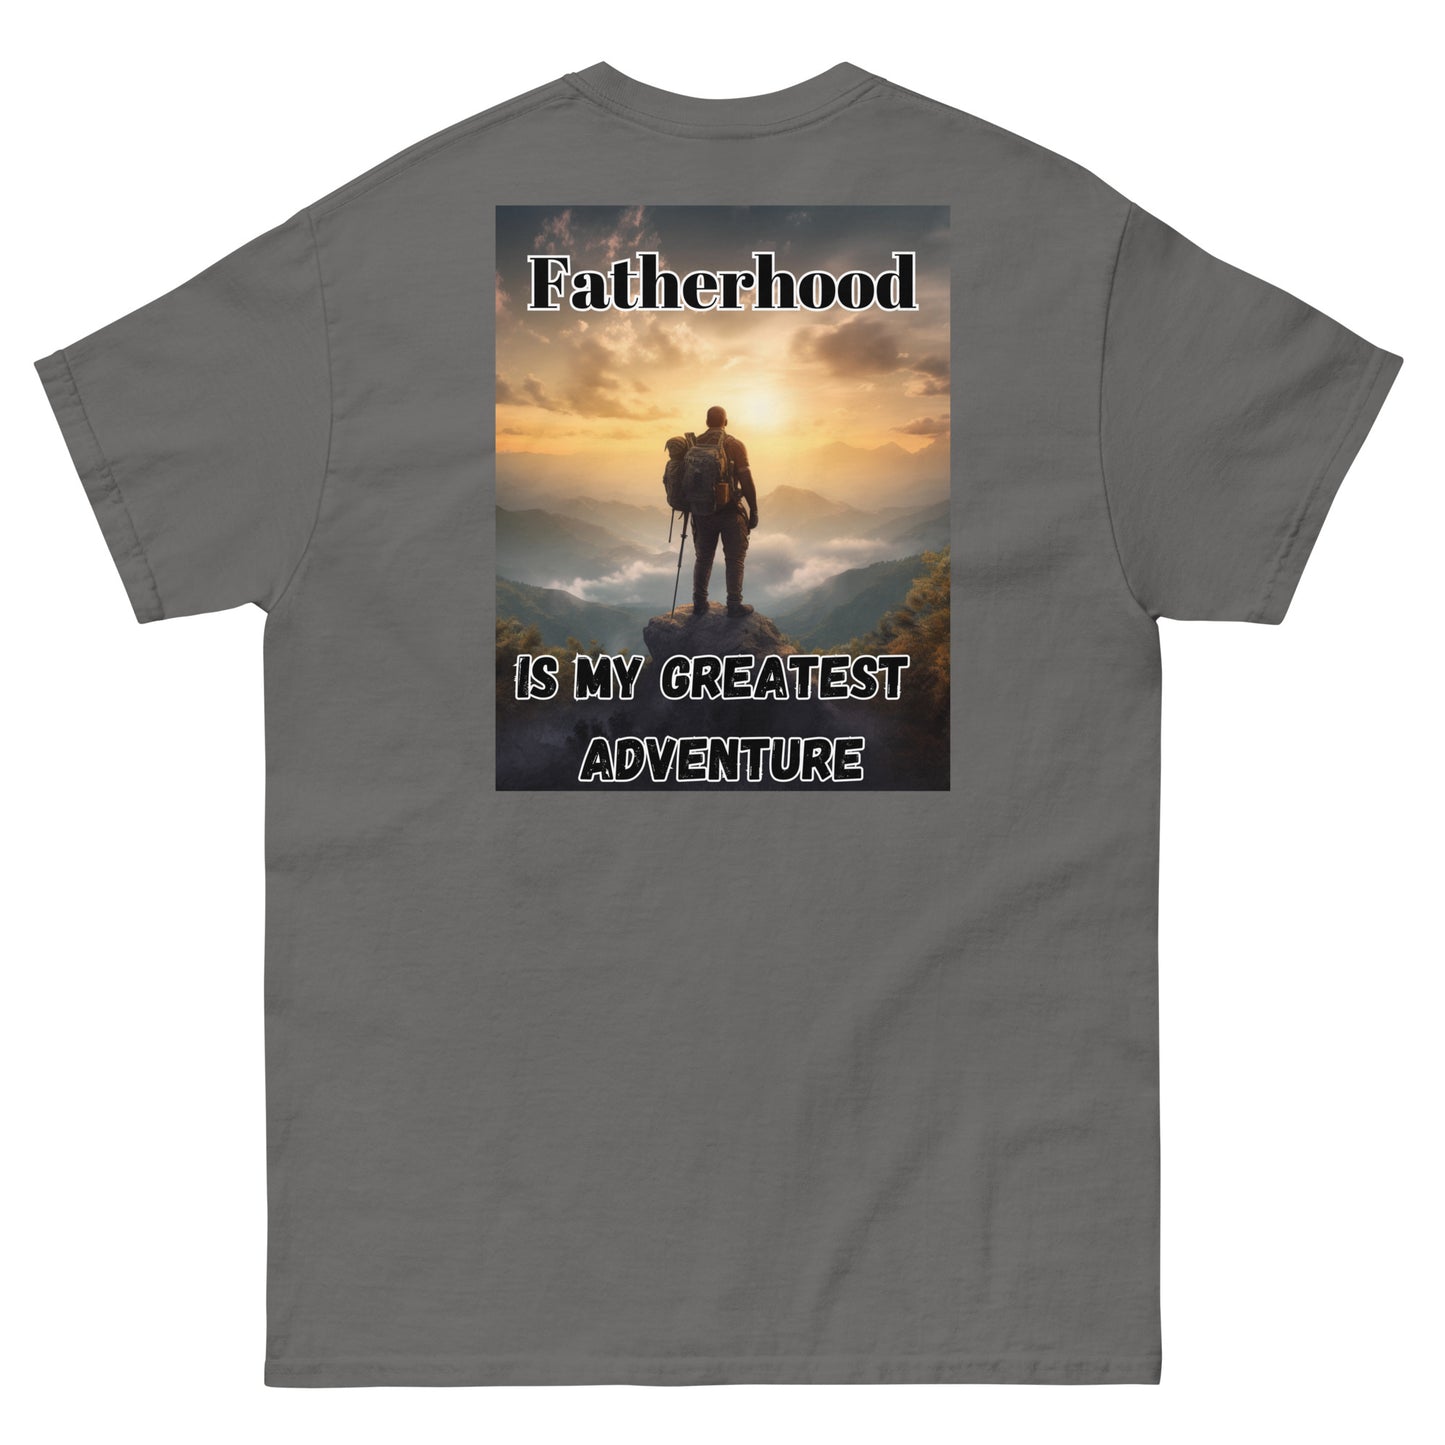 FatherHood is my Greatest Adventure, Men's classic tee